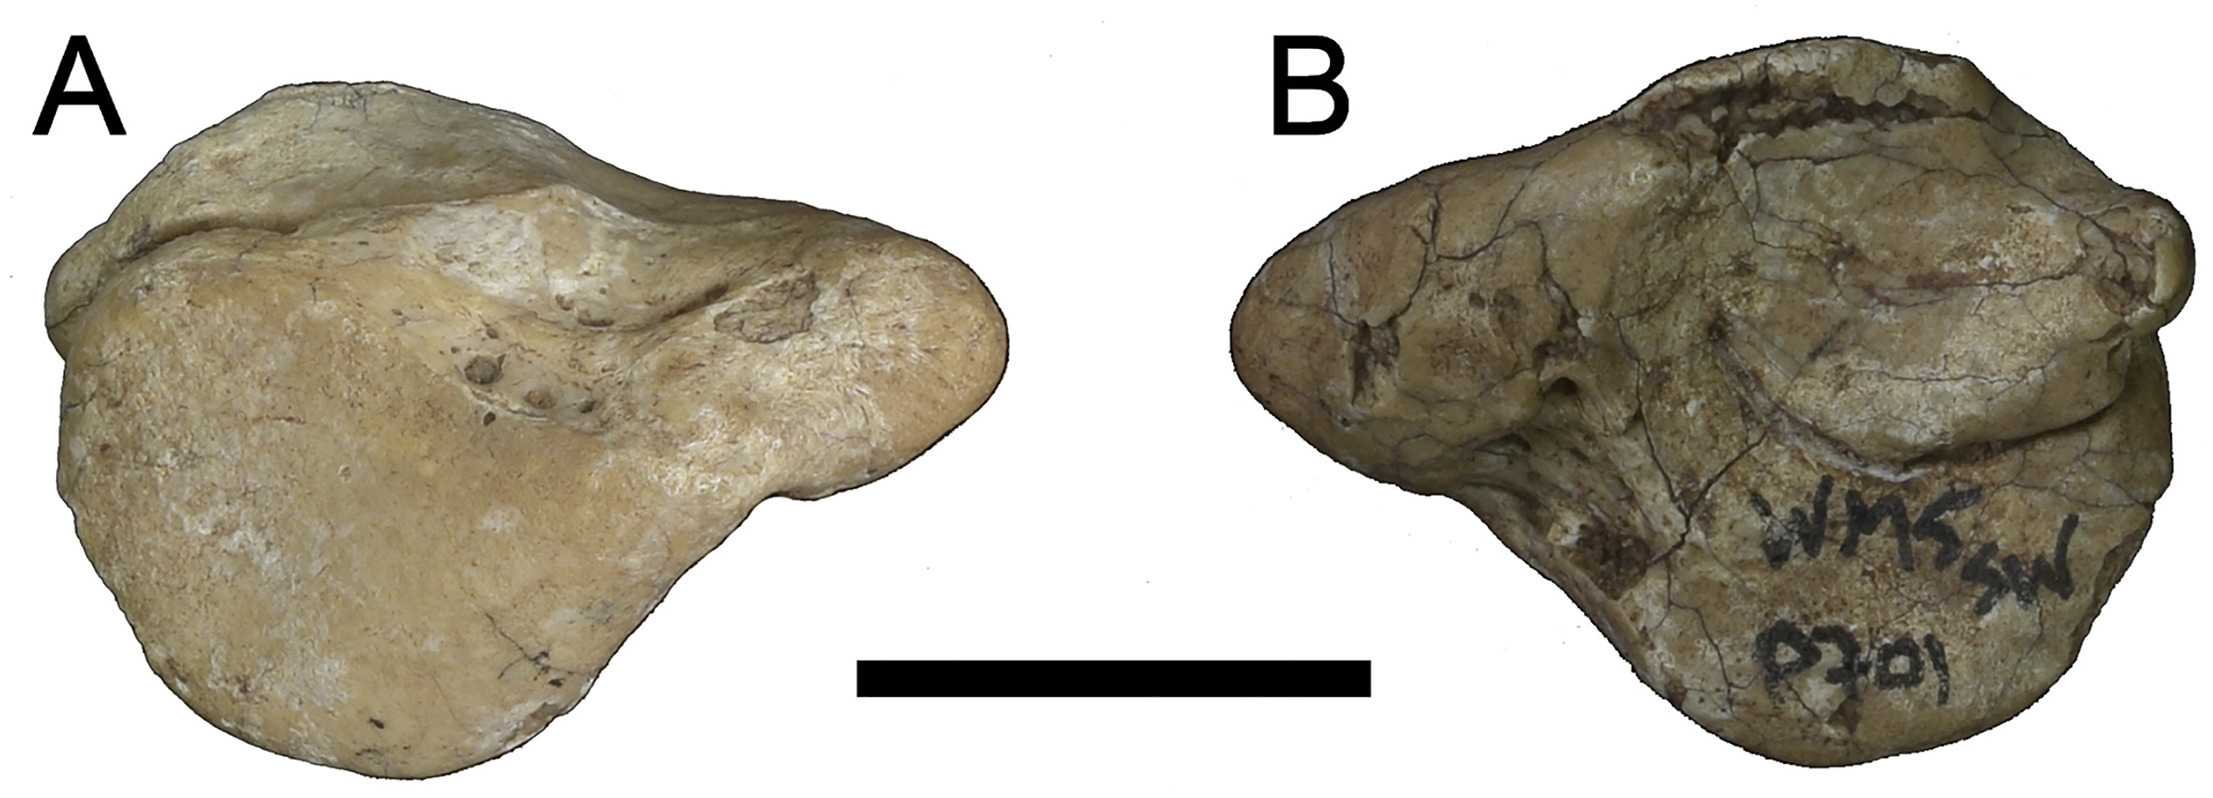 ardipithecus fossils